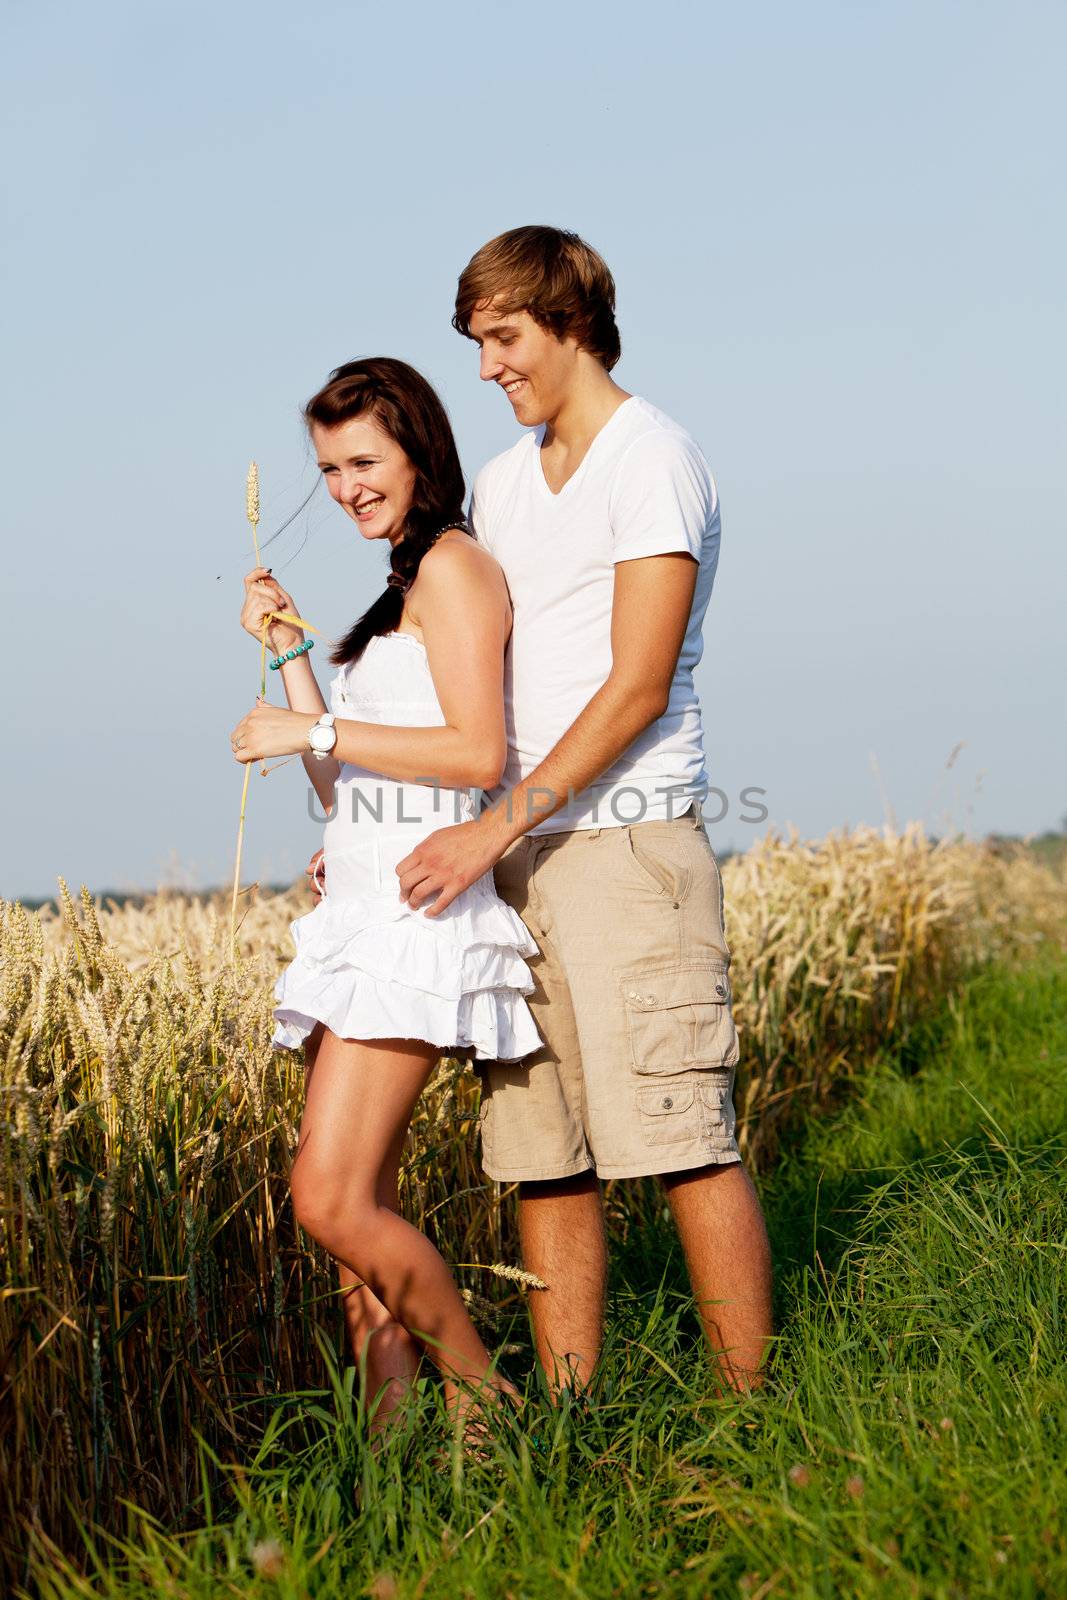 happy couple in love outdoor in summer on field having fun